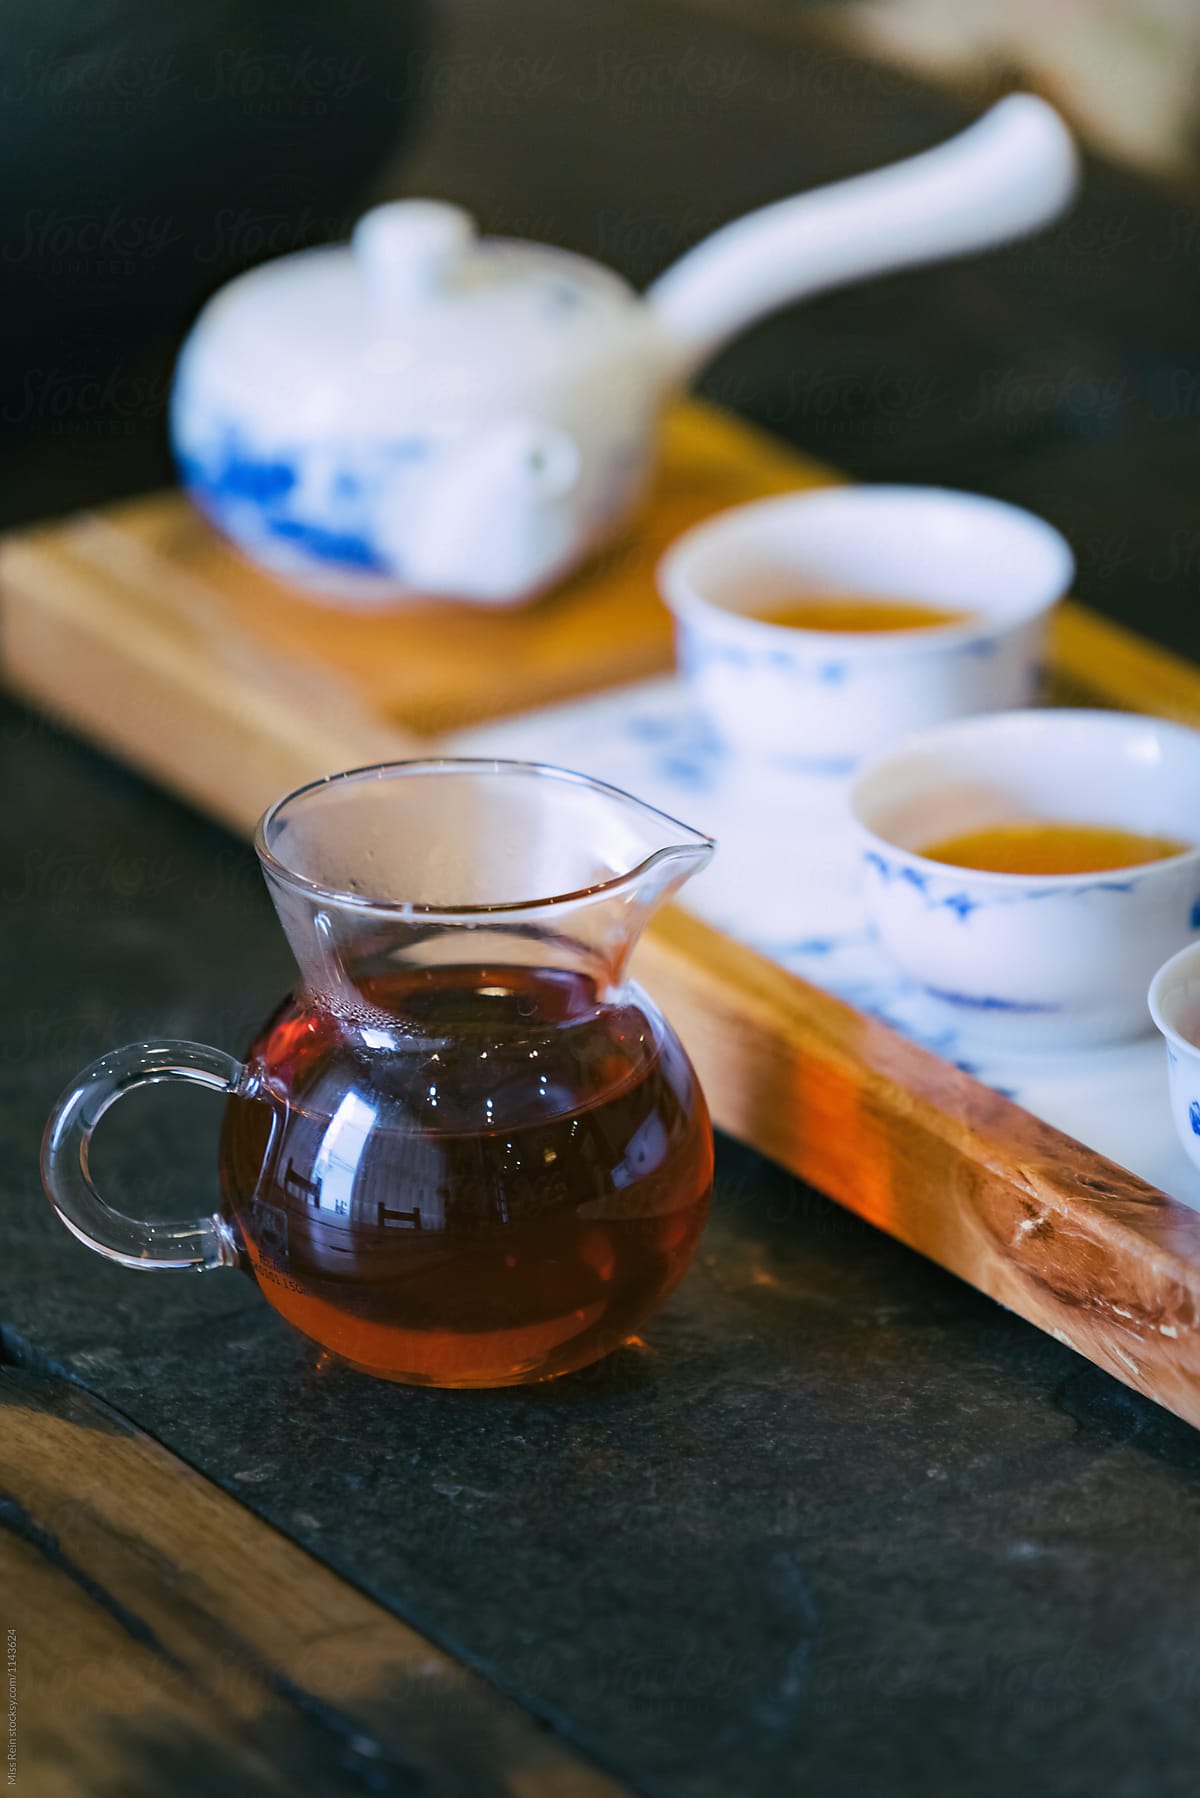 china tea on the table